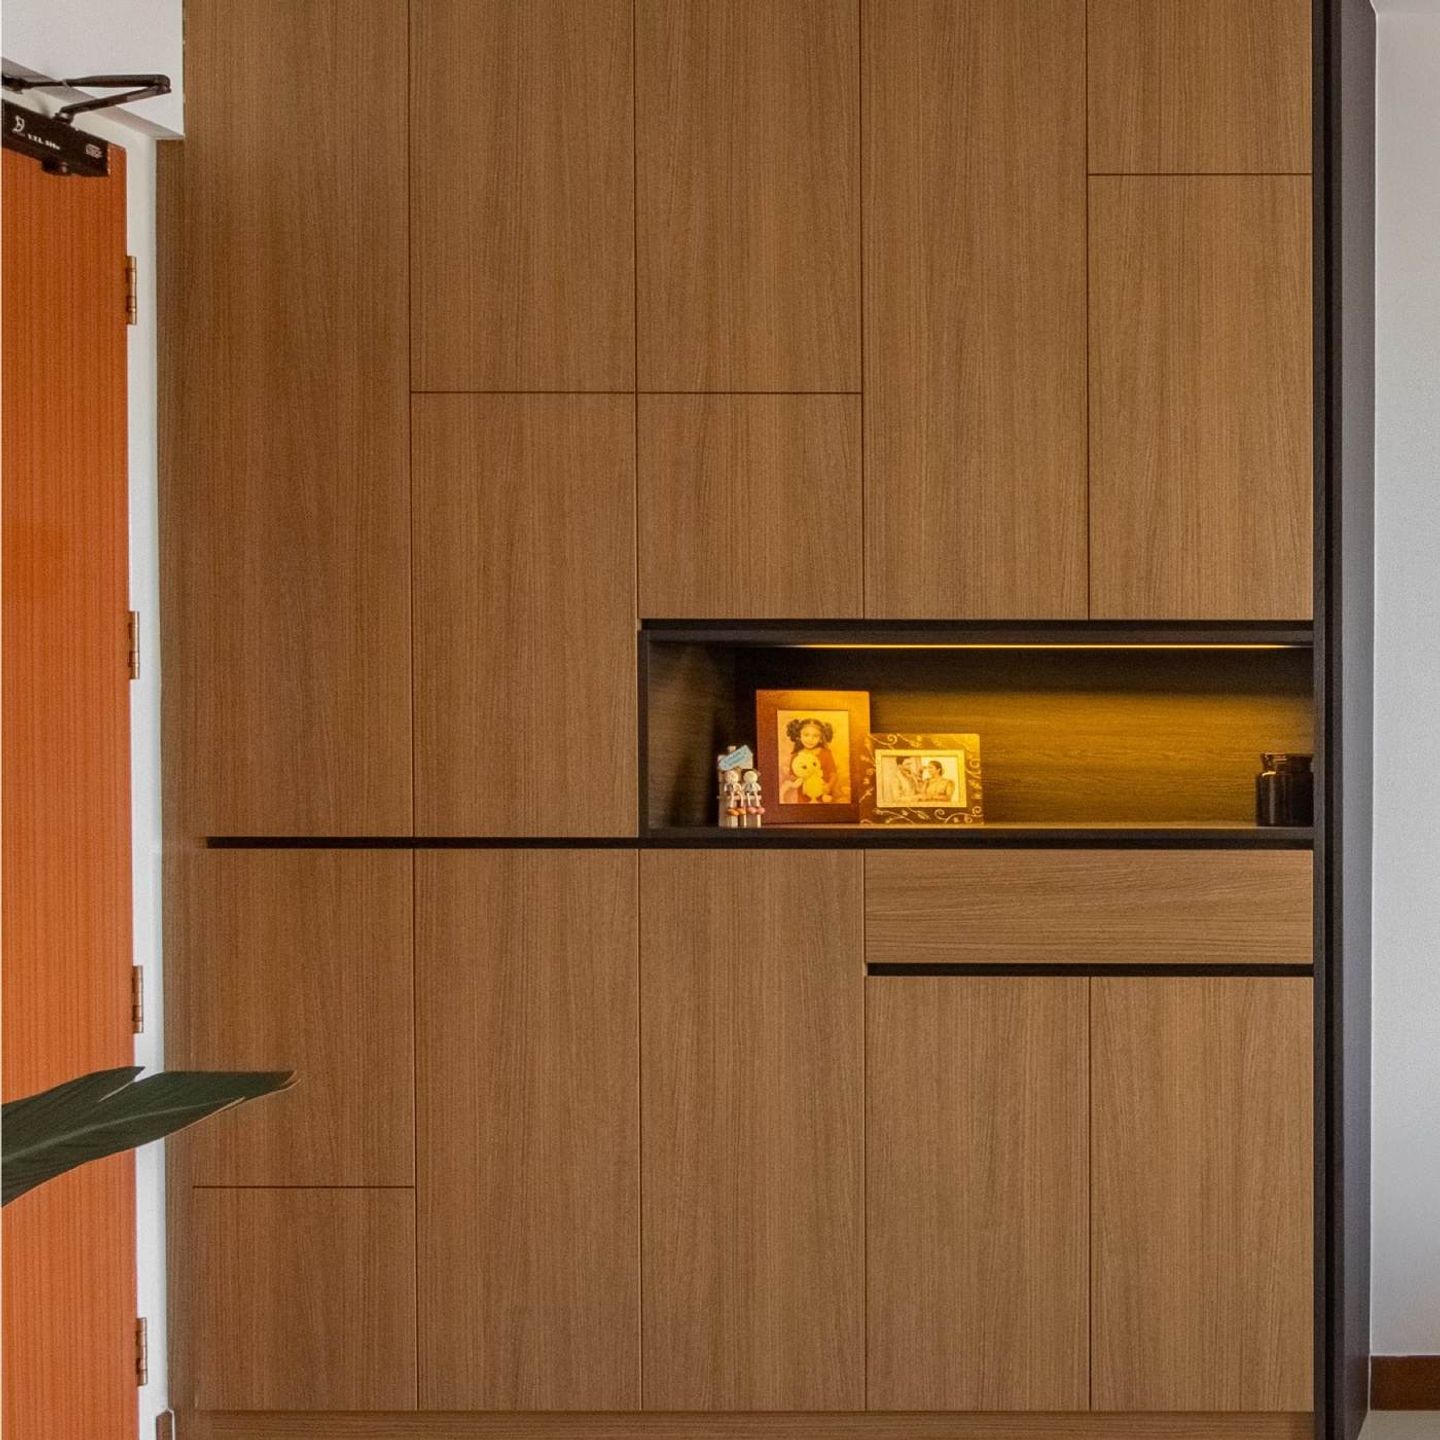 Modern Storage Units With Wooden Laminates - Livspace